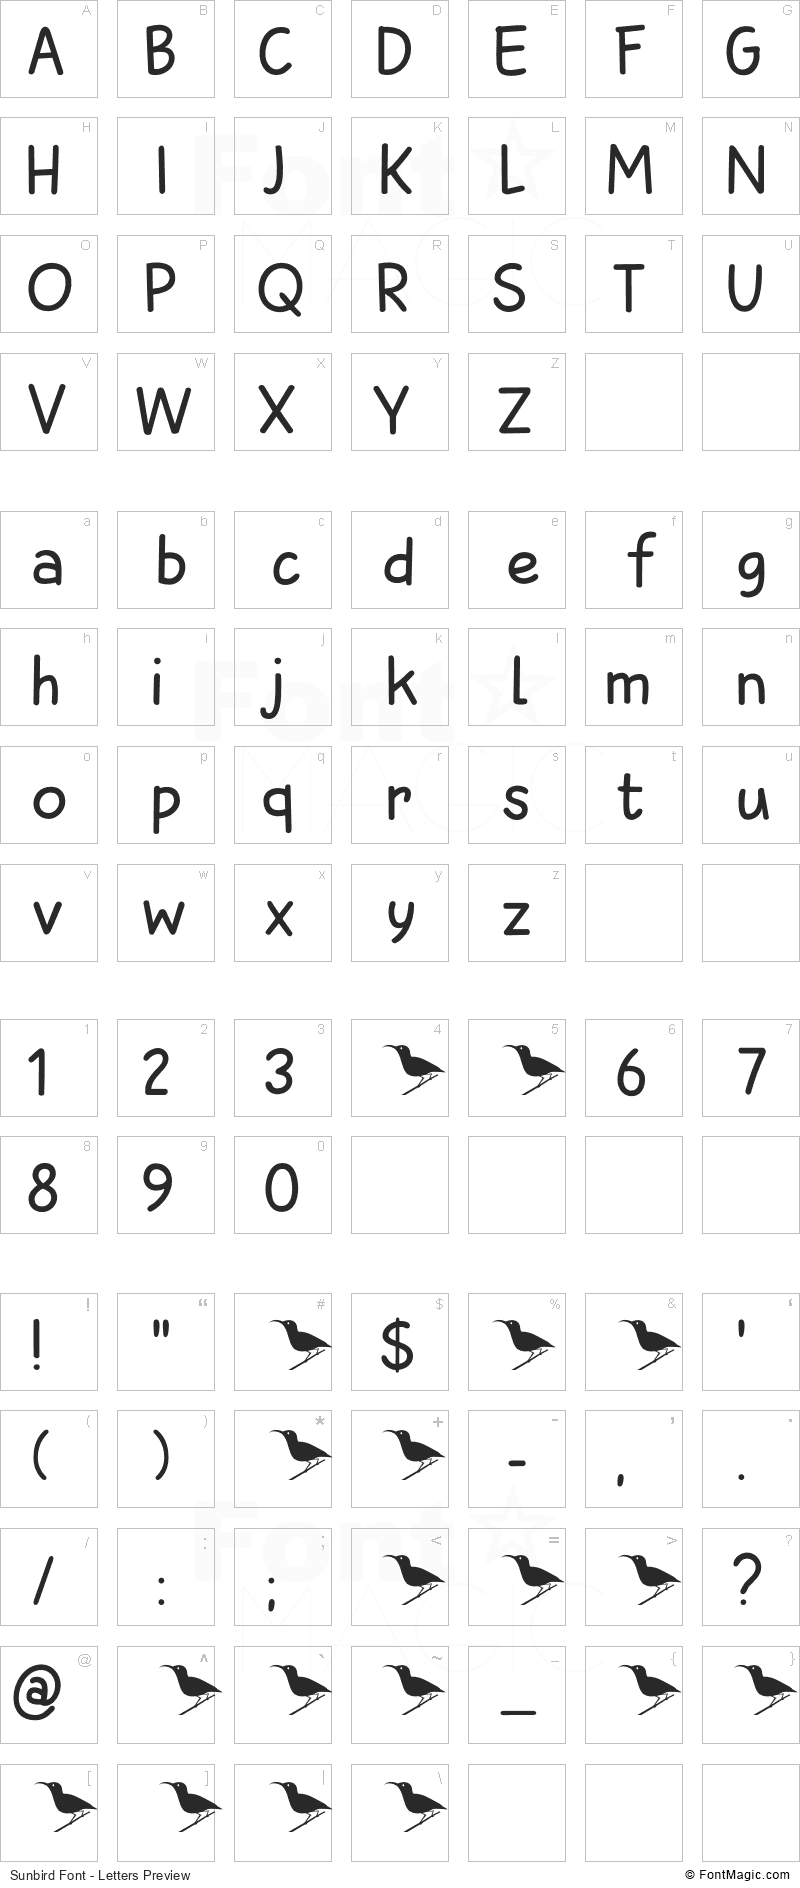 Sunbird Font - All Latters Preview Chart